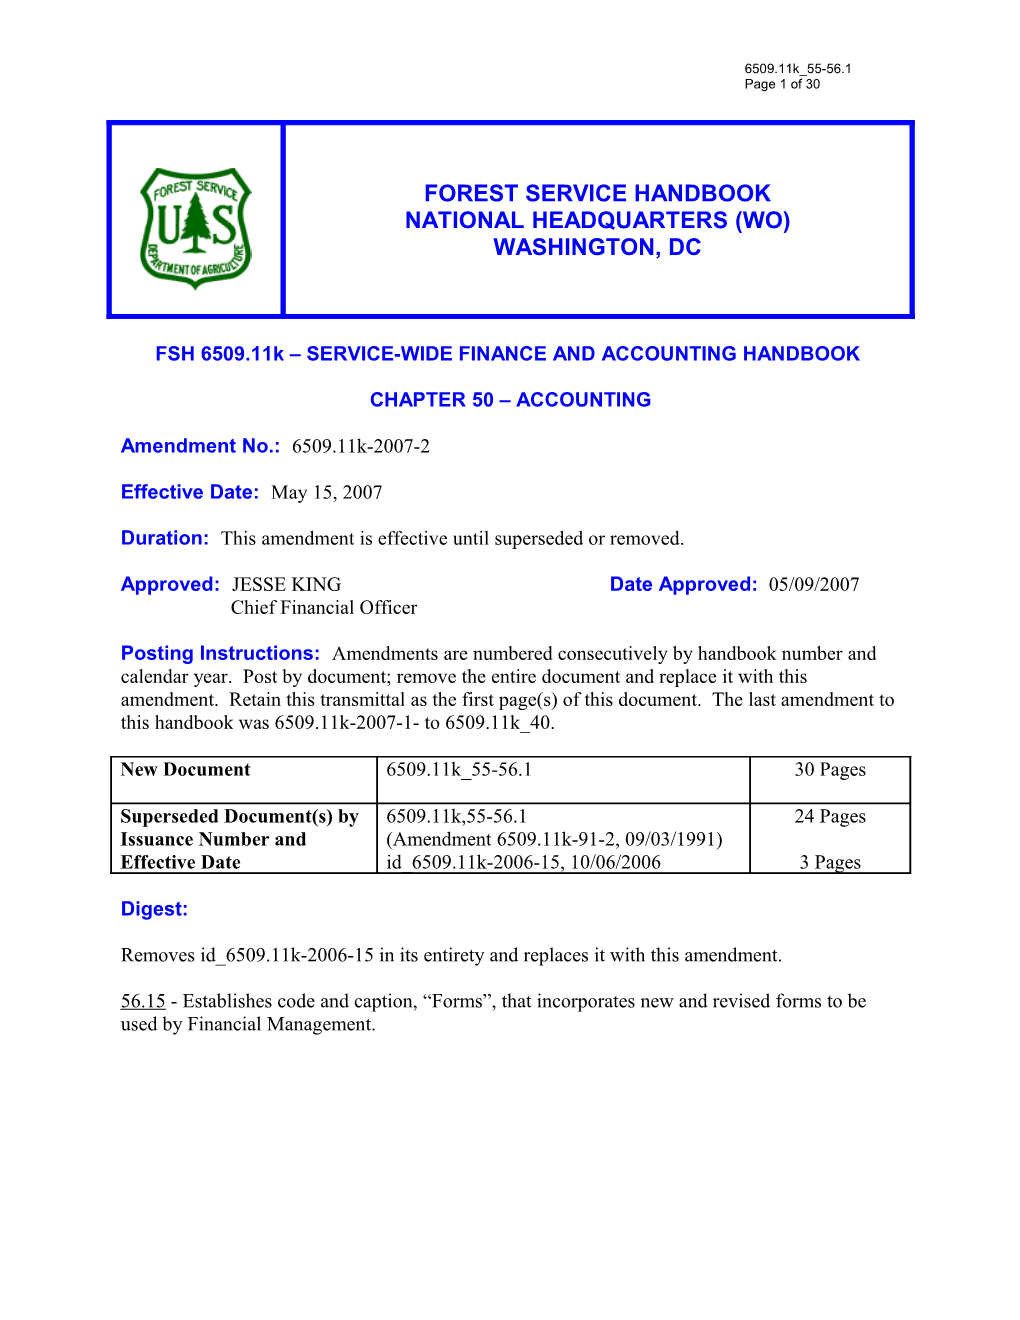 Fsh 6509.11K Service-Wide Finance and Accounting Handbook